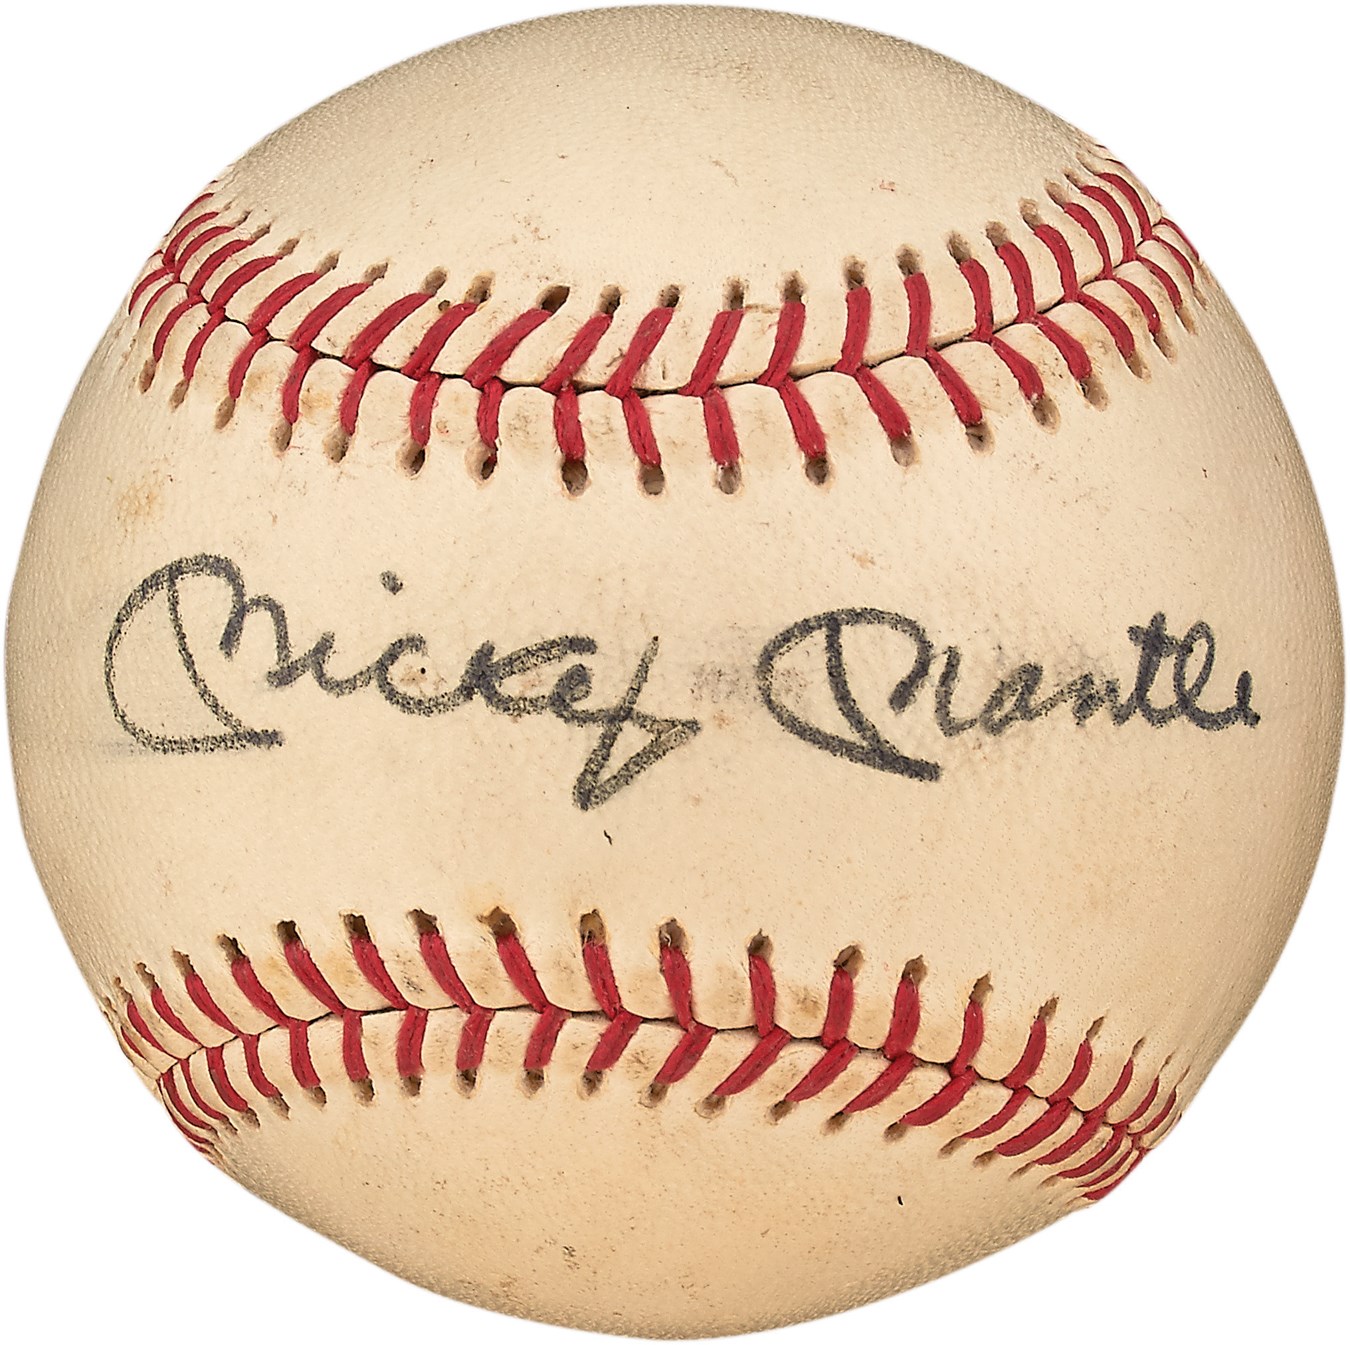 1974 Mickey Mantle Signed Dinner Program and Baseball - Signed at the Dinner (PSA)